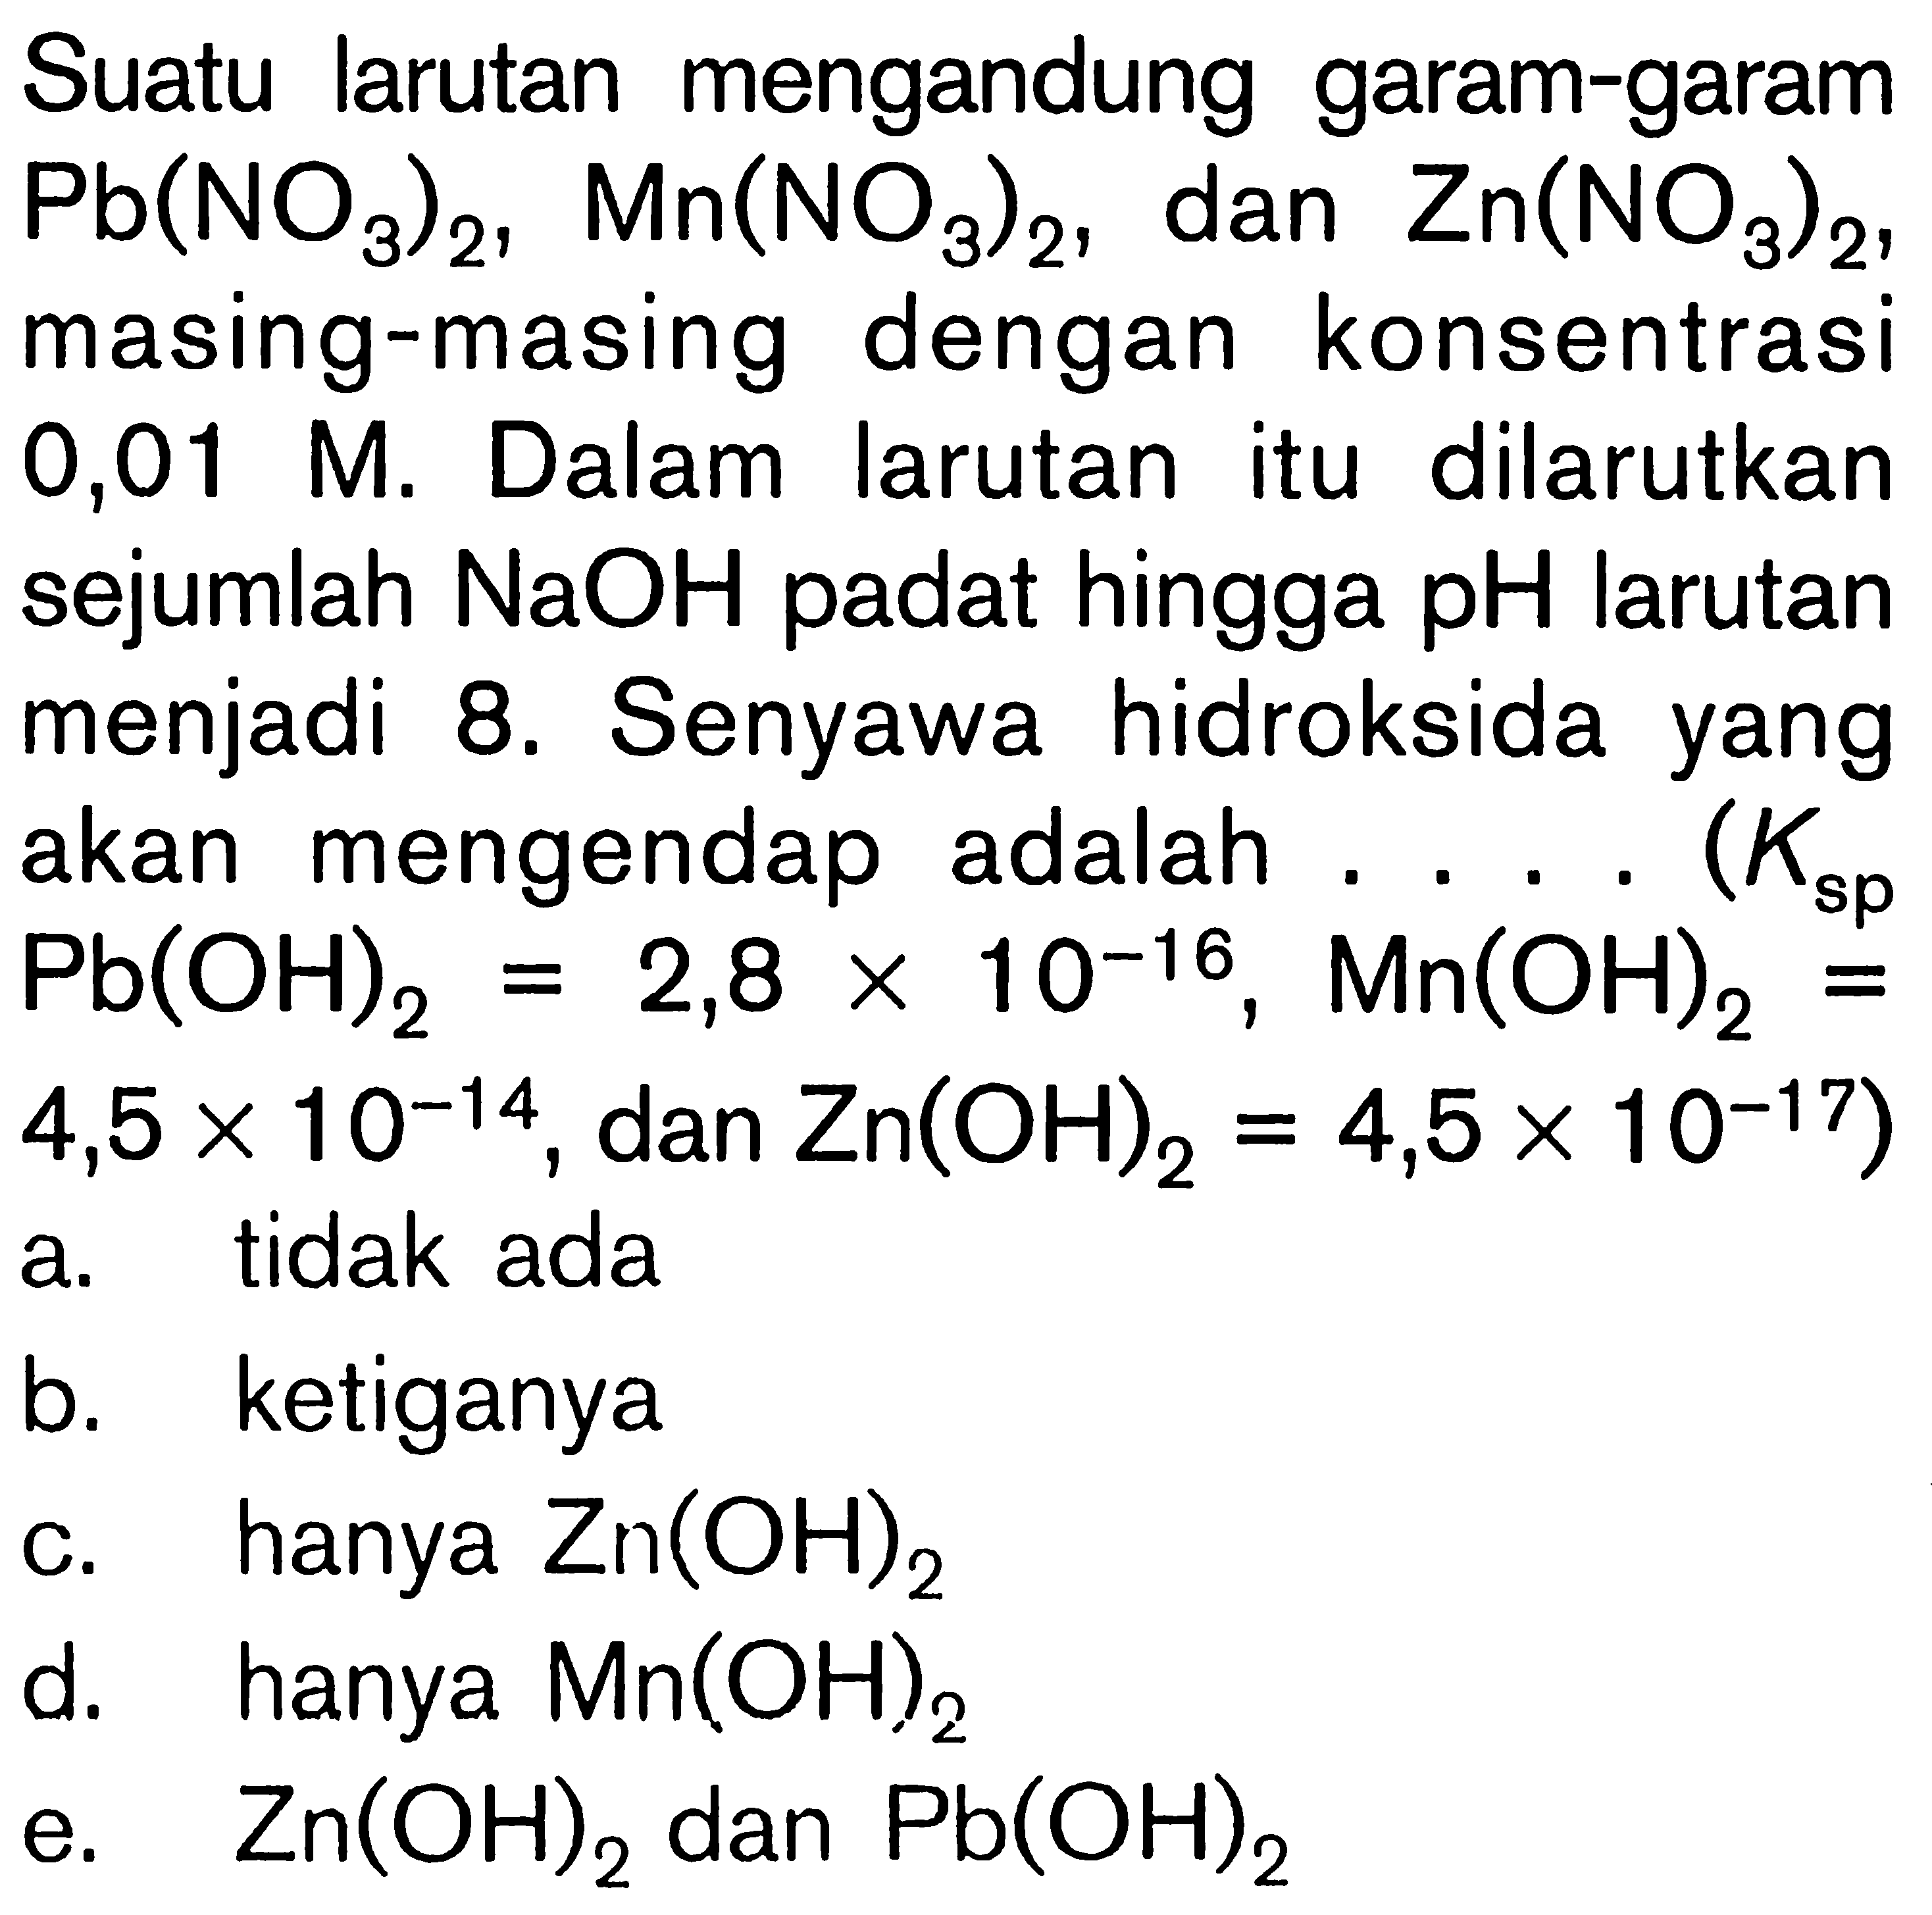 Suatu larutan mengandung garam-garam Pb(NO3)2, Mn(NO3)2 ,dan Zn(NO3)2, masing-masing dengan konsentrasi 0,01 M . Dalam larutan itu dilarutkan sejumlah NaOH padat hingga  pH  larutan menjadi 8. Senyawa hidroksida yang akan mengendap adalah ....  (Ksp Pb(OH)2=2,8 x 10^-16, Mn(OH)2=4,5 x 10^-14, dan Zn(OH)2=4,5 x 10^-17) 